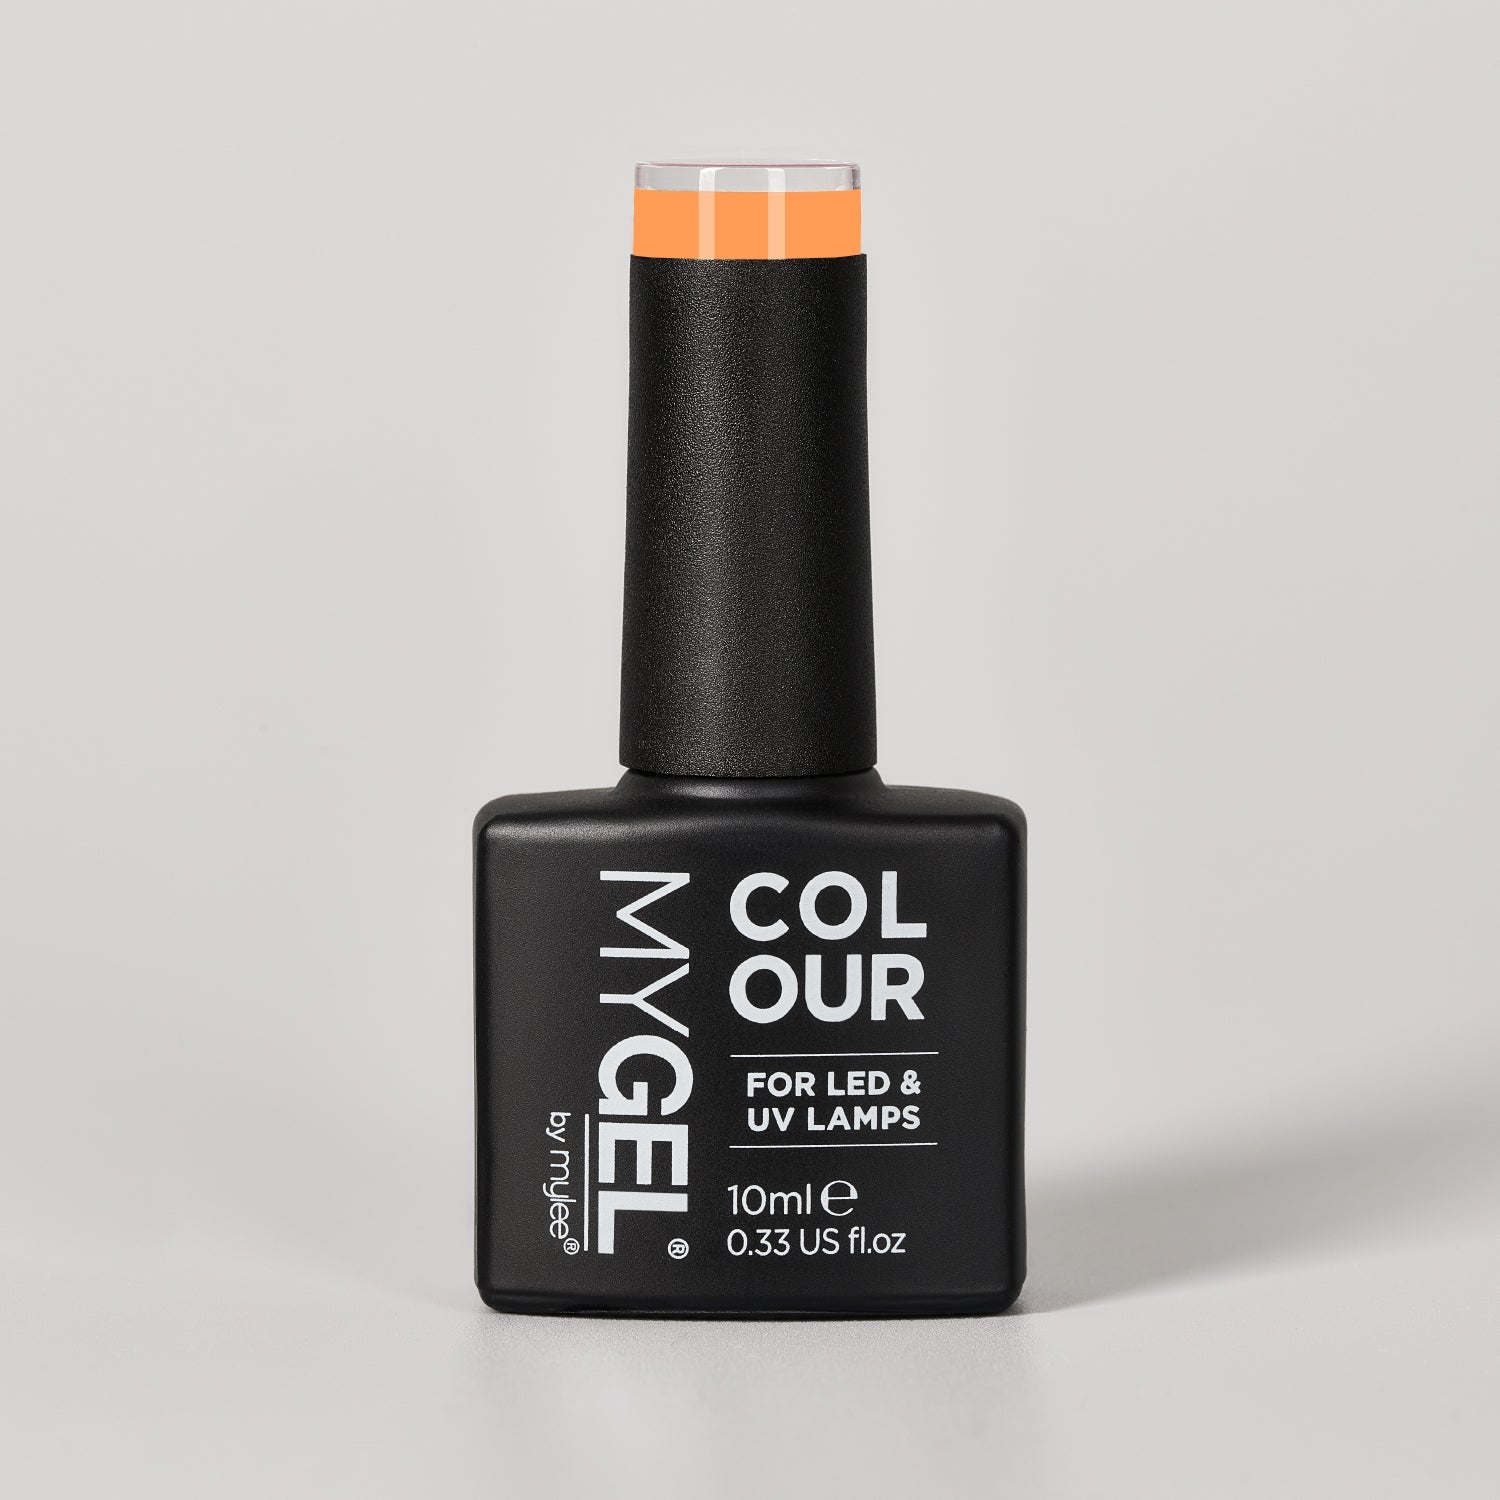 Mylee Safari Trip LED/UV Orange Gel Nail Polish - 10ml – Long Lasting At Home Manicure/Pedicure, High Gloss And Chip Free Wear Nail Varnish